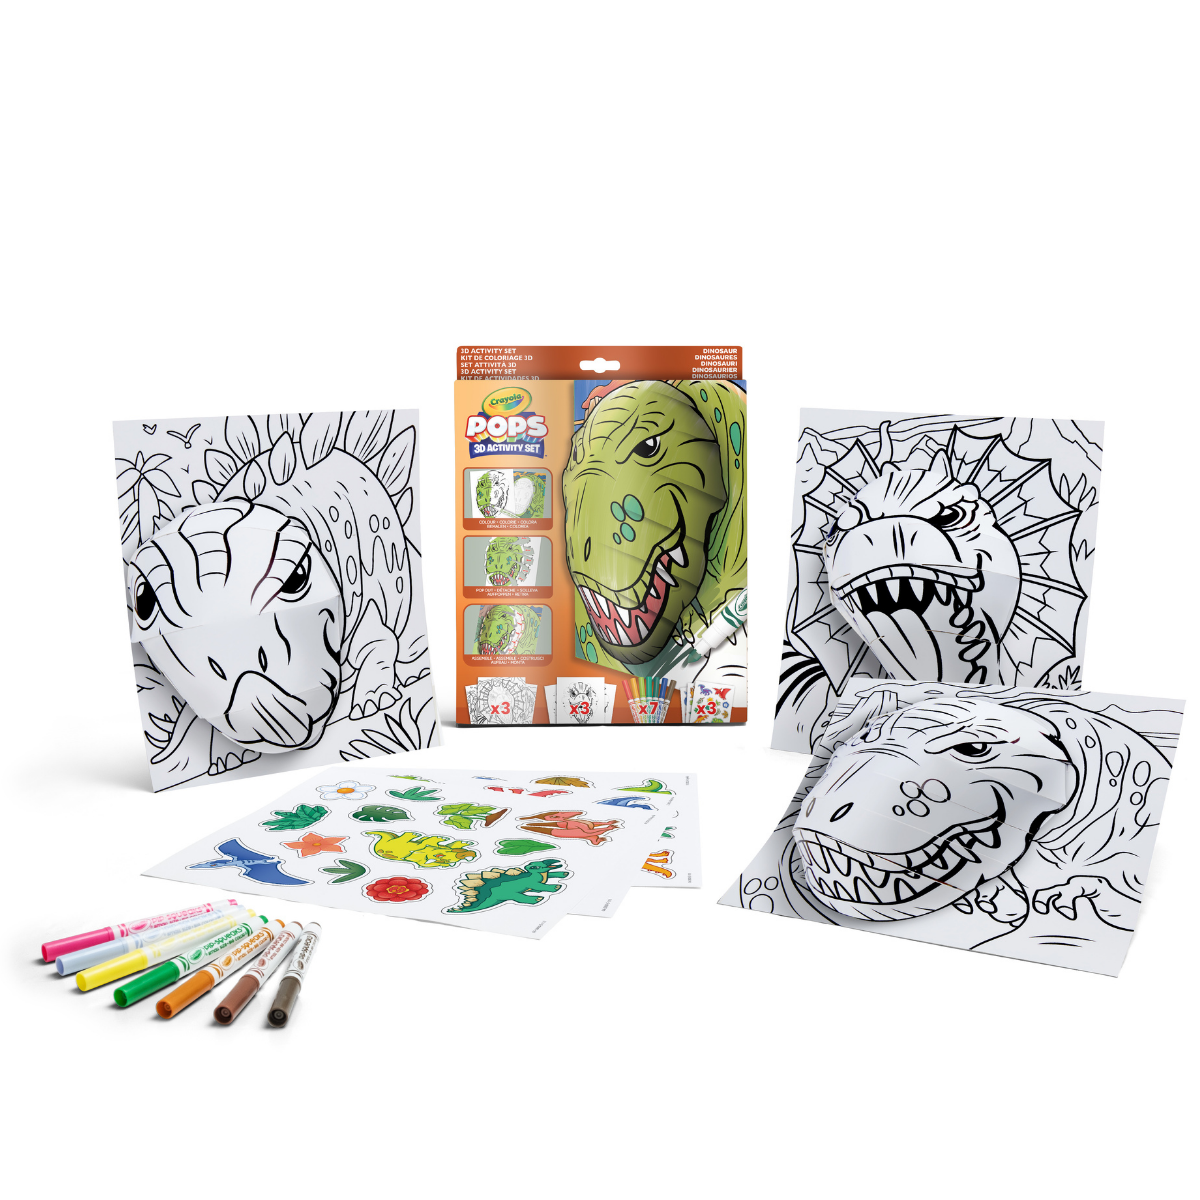 Crayola pops 3d activity set dinosauri – colora e crea disegni tridimensionali - CRAYOLA